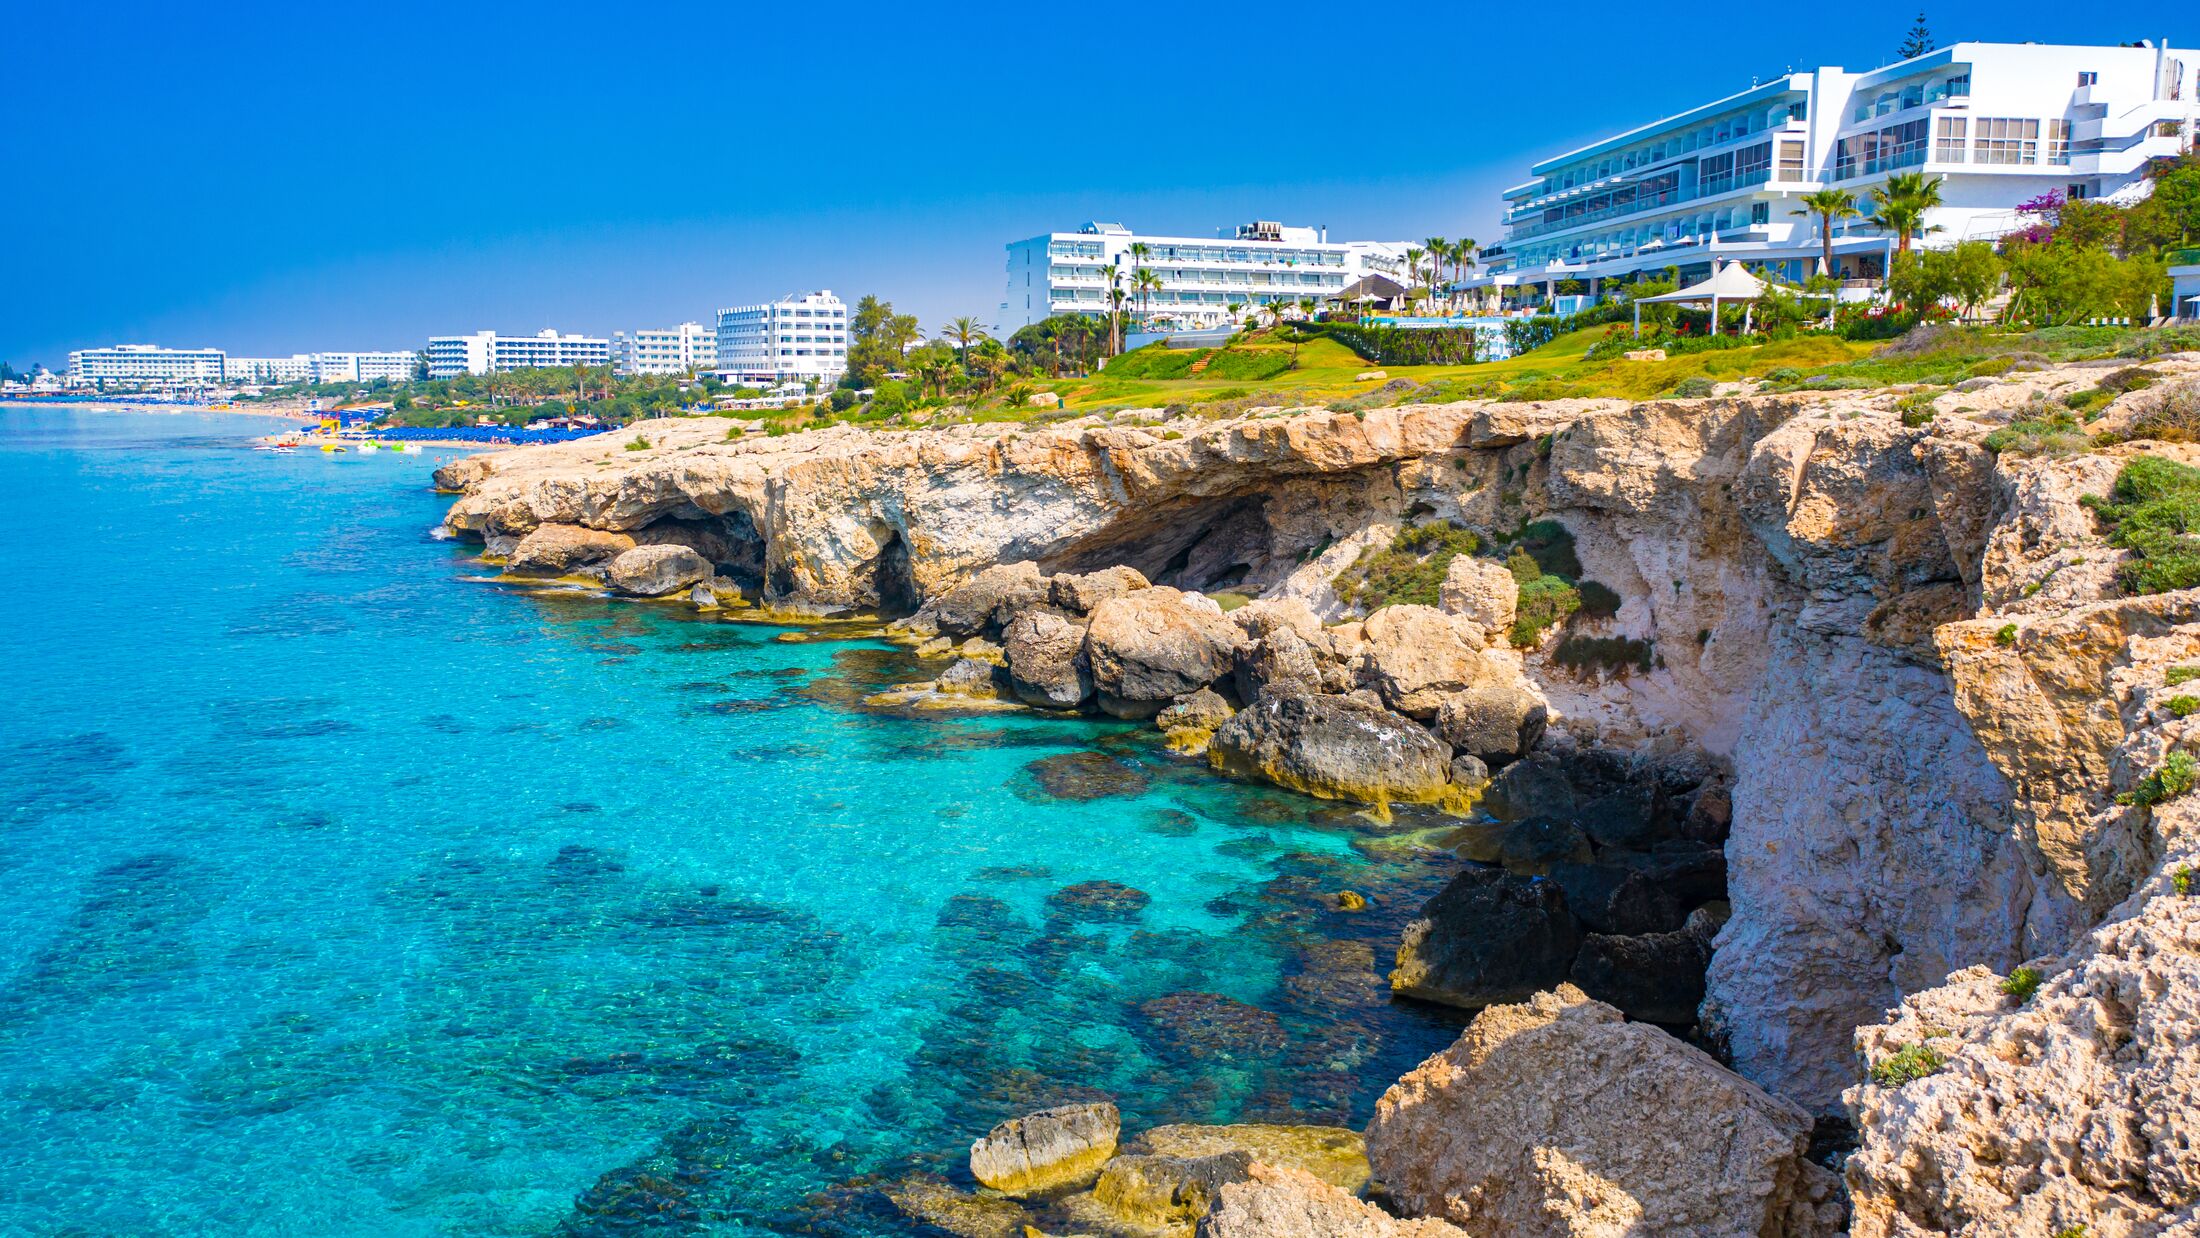 Cyprus. Ayia Napa Resort. Hotels off the coast. Blue Loguna in Cyprus. Rocky seashore. Relax in a resort hotel. Travels in Cyprus. Mediterranean Sea. Cavo Greco. Ayia Napa Resort Panorama.